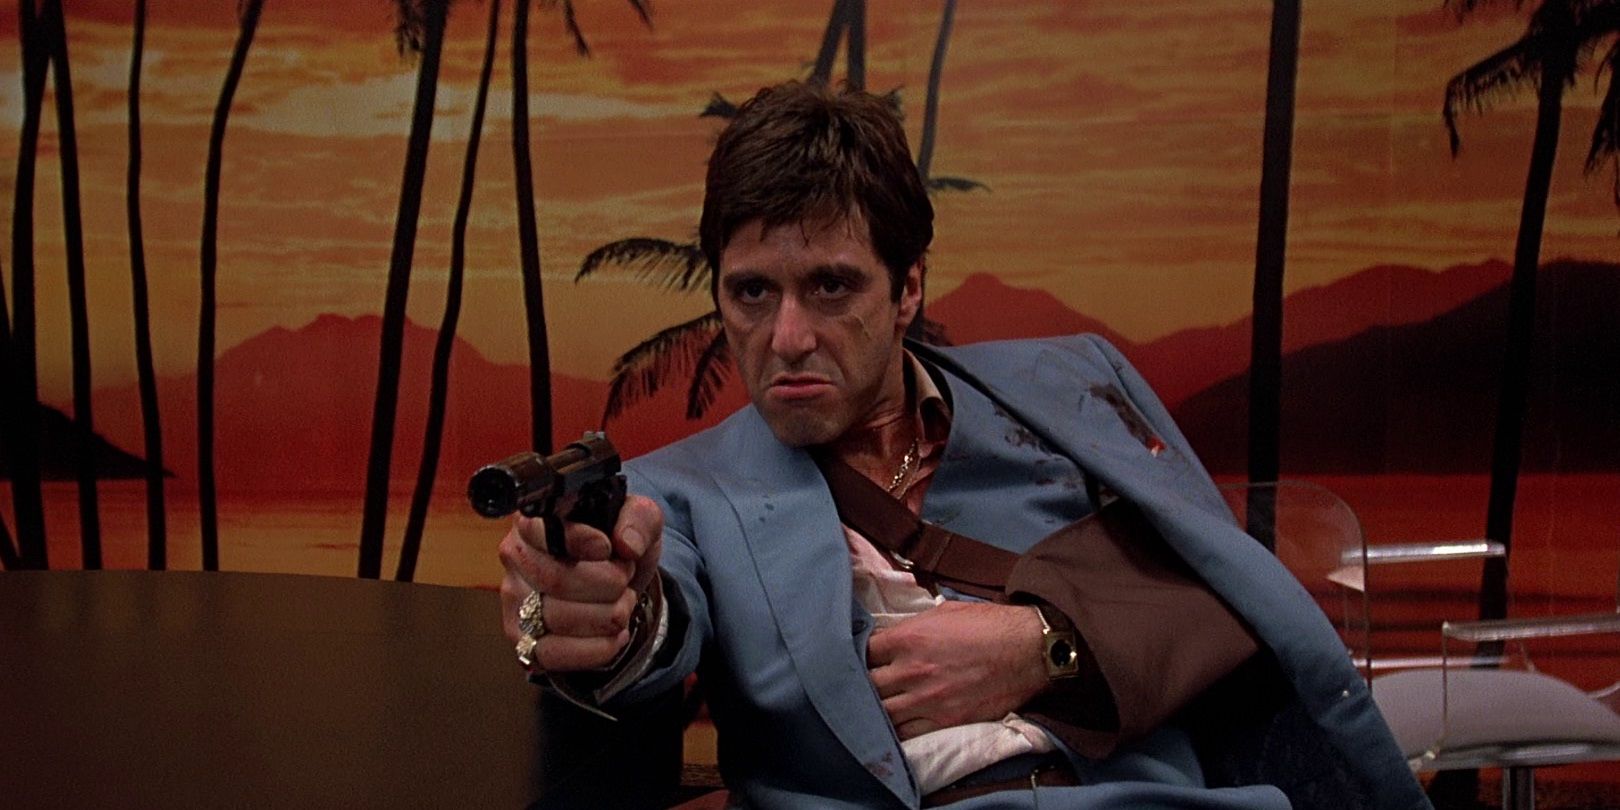 Al Pacino aiming a gun in Scarface